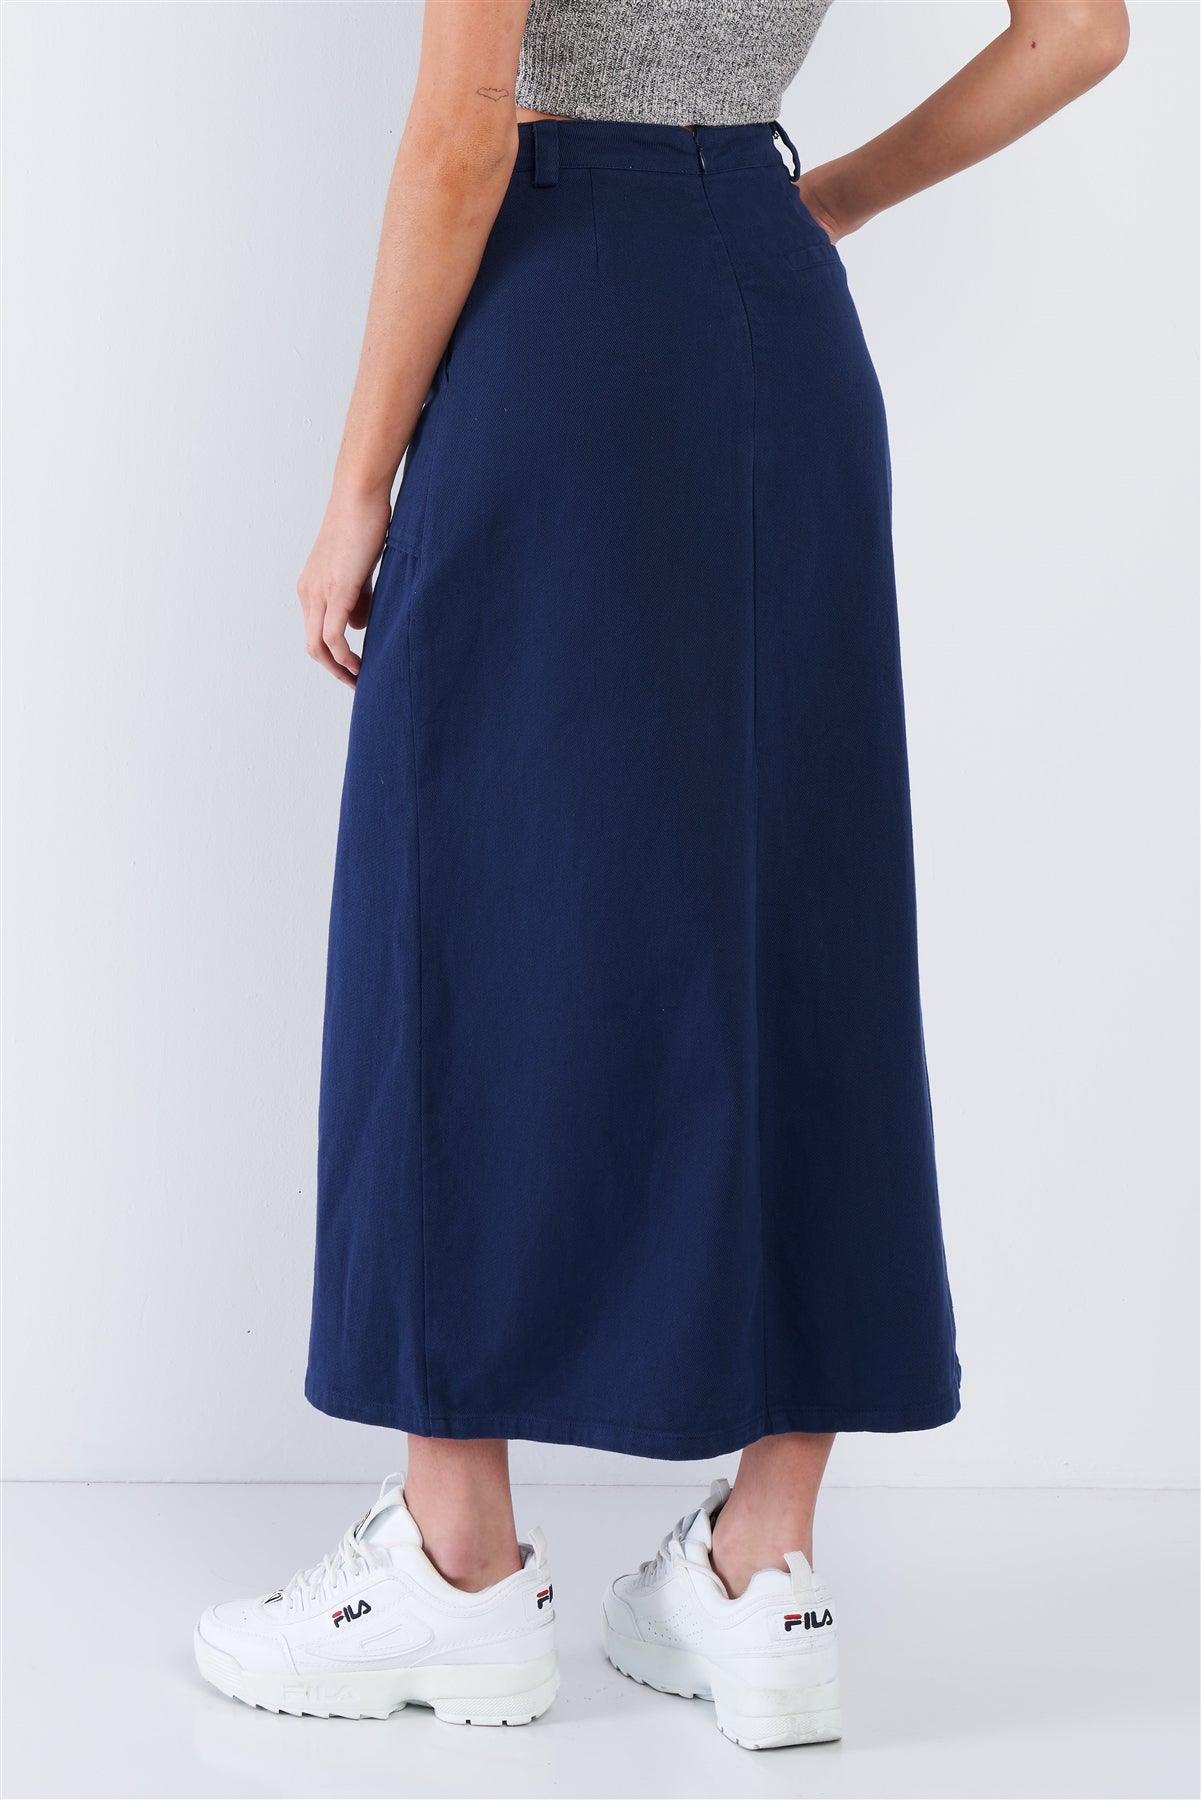 Navy Blue Denim Midi Center Slit High Waist Casual Skirt /2-2-2